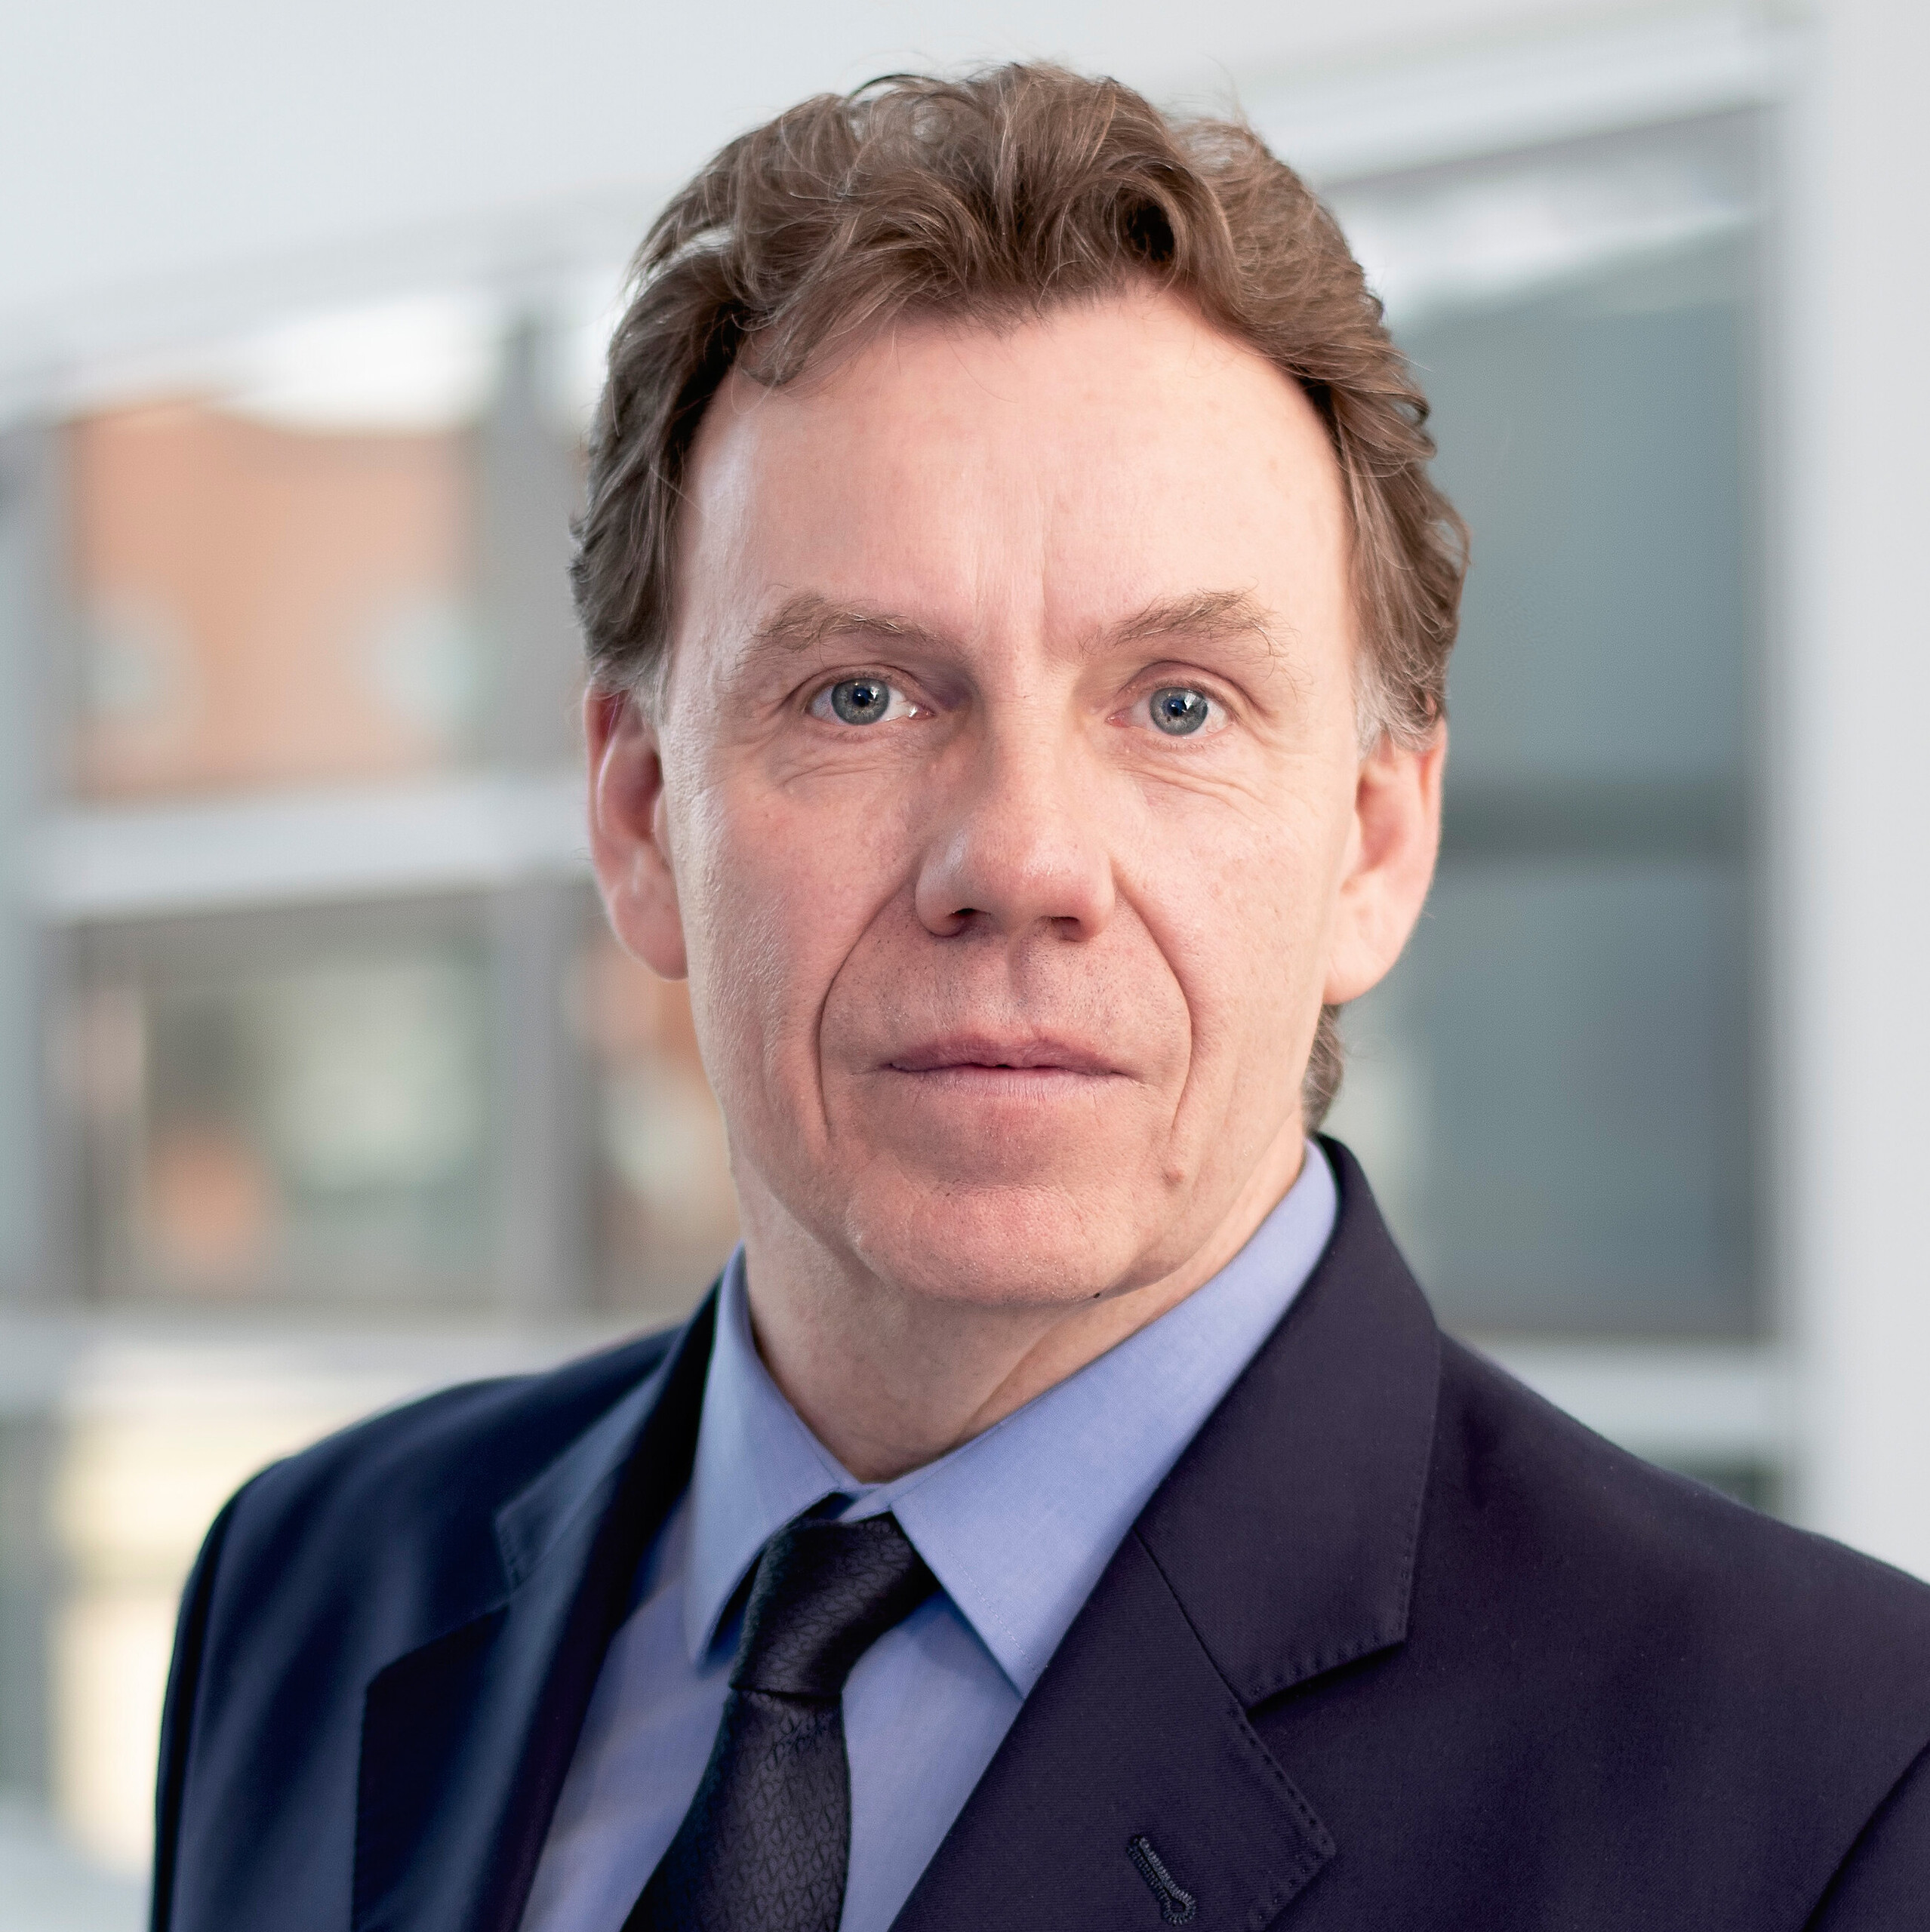 Roland Fuchs, Head of European Real Estate Finance at Allianz Real Estate